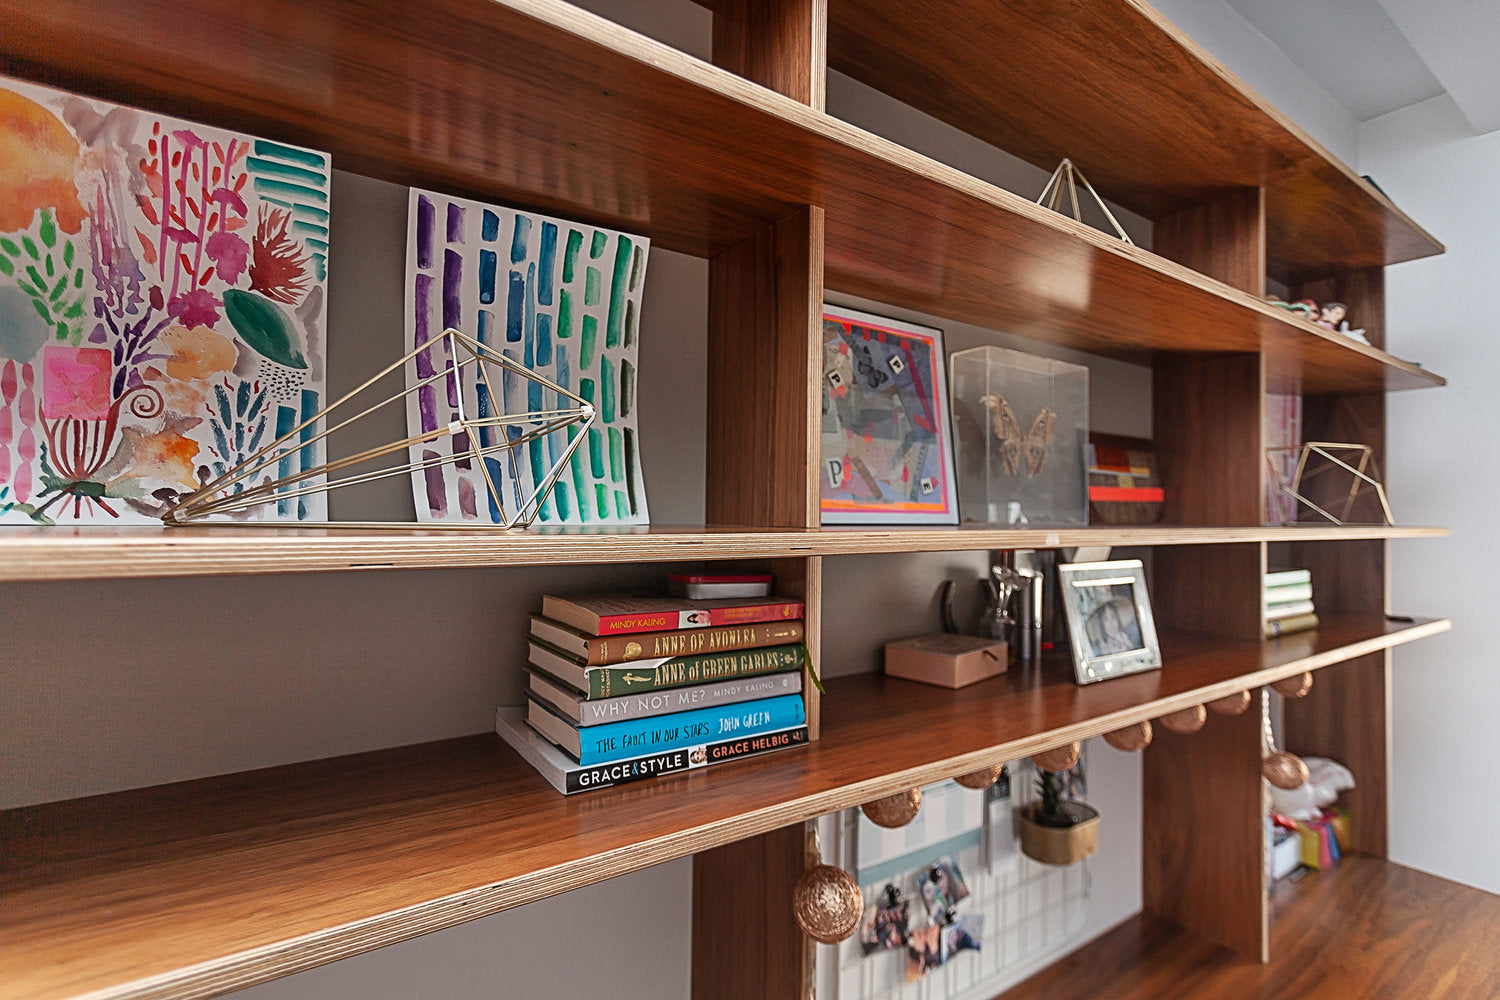 Assorted books, artwork, and decor on wooden shelves.